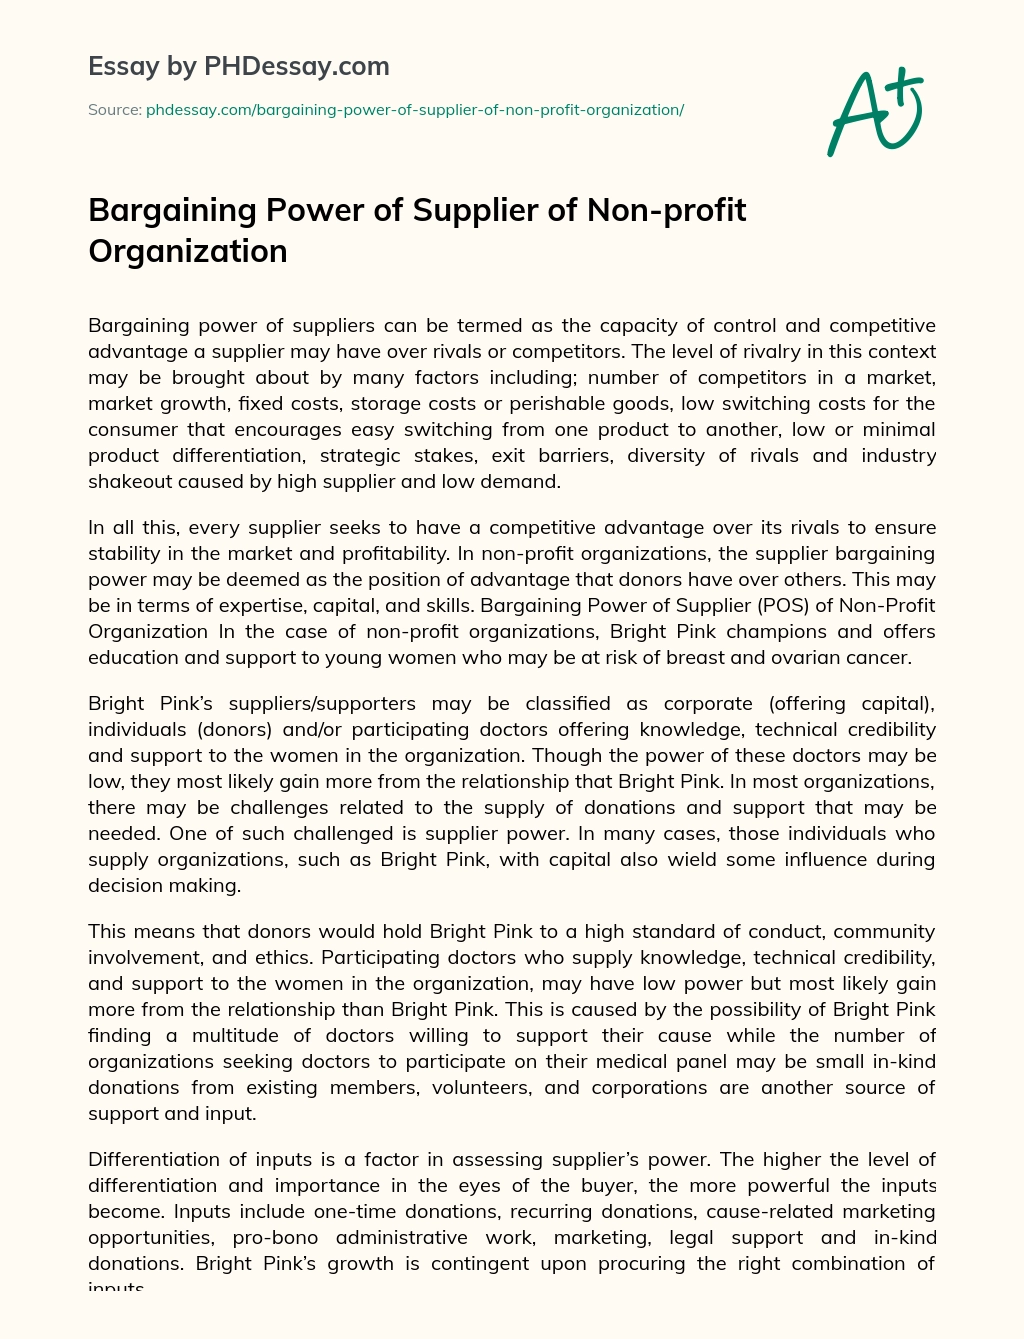 Bargaining Power of Supplier of Non-profit Organization essay